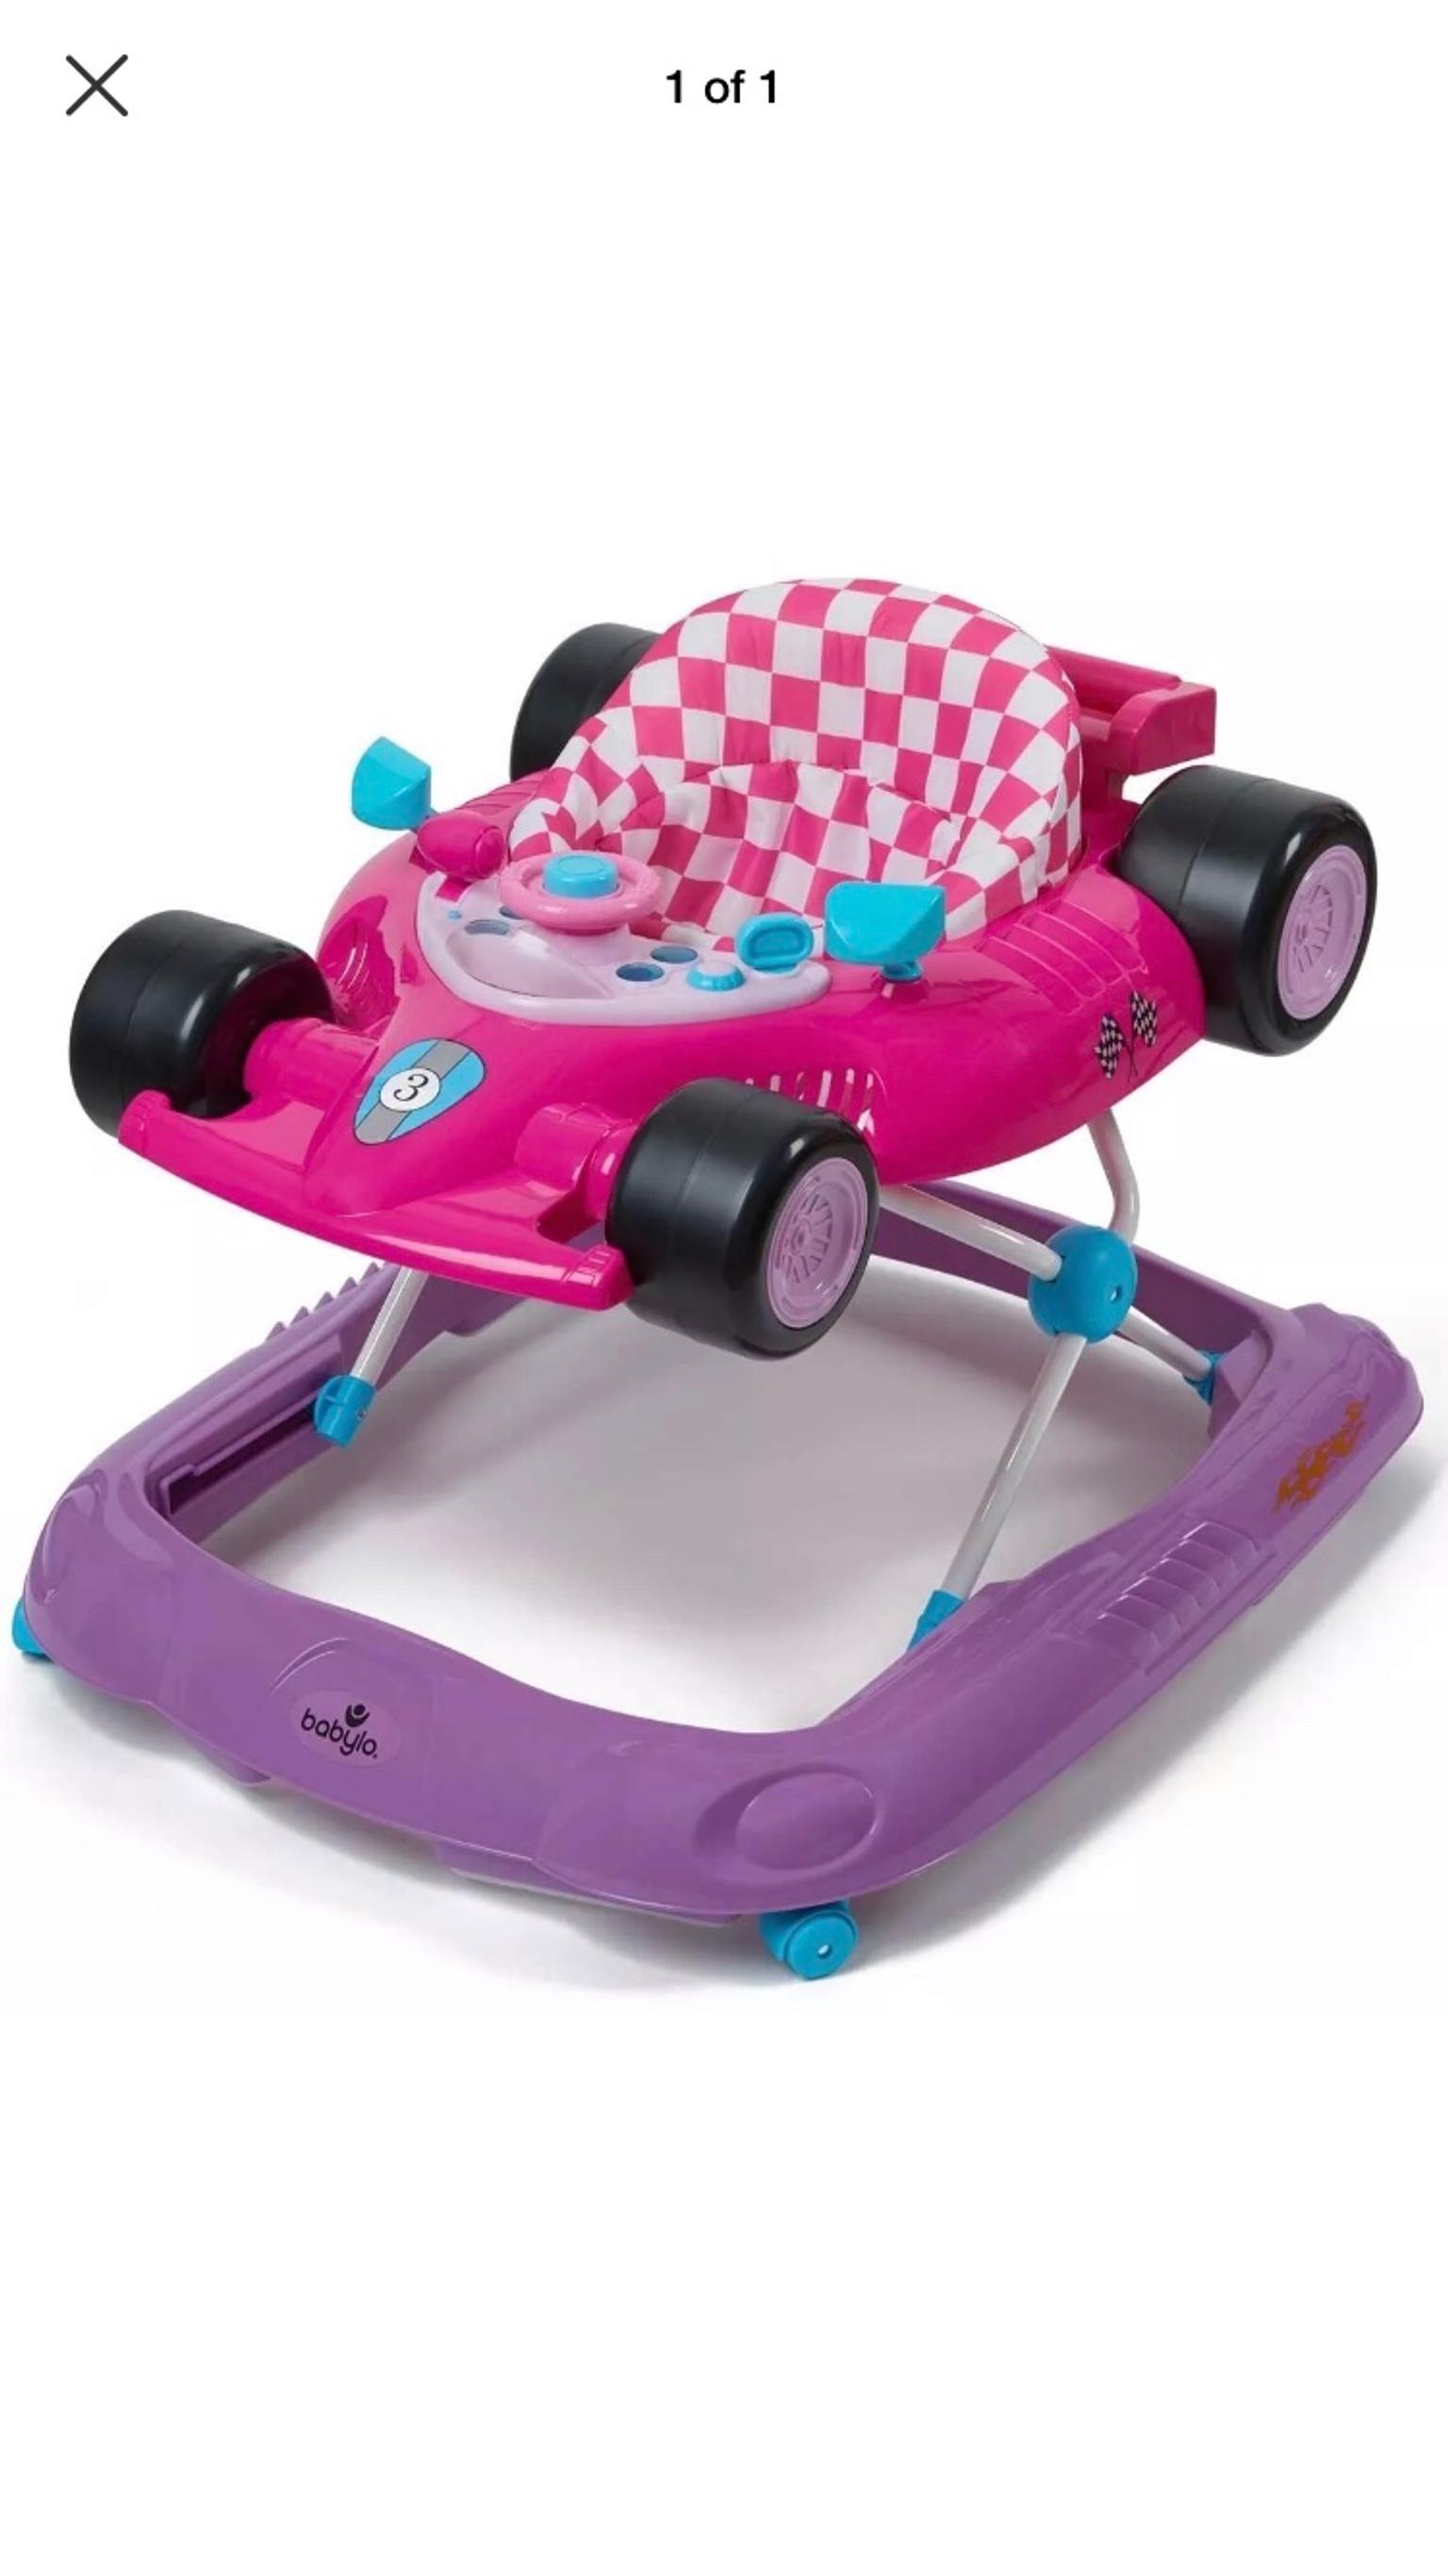 Pink race car baby walker in NG10 